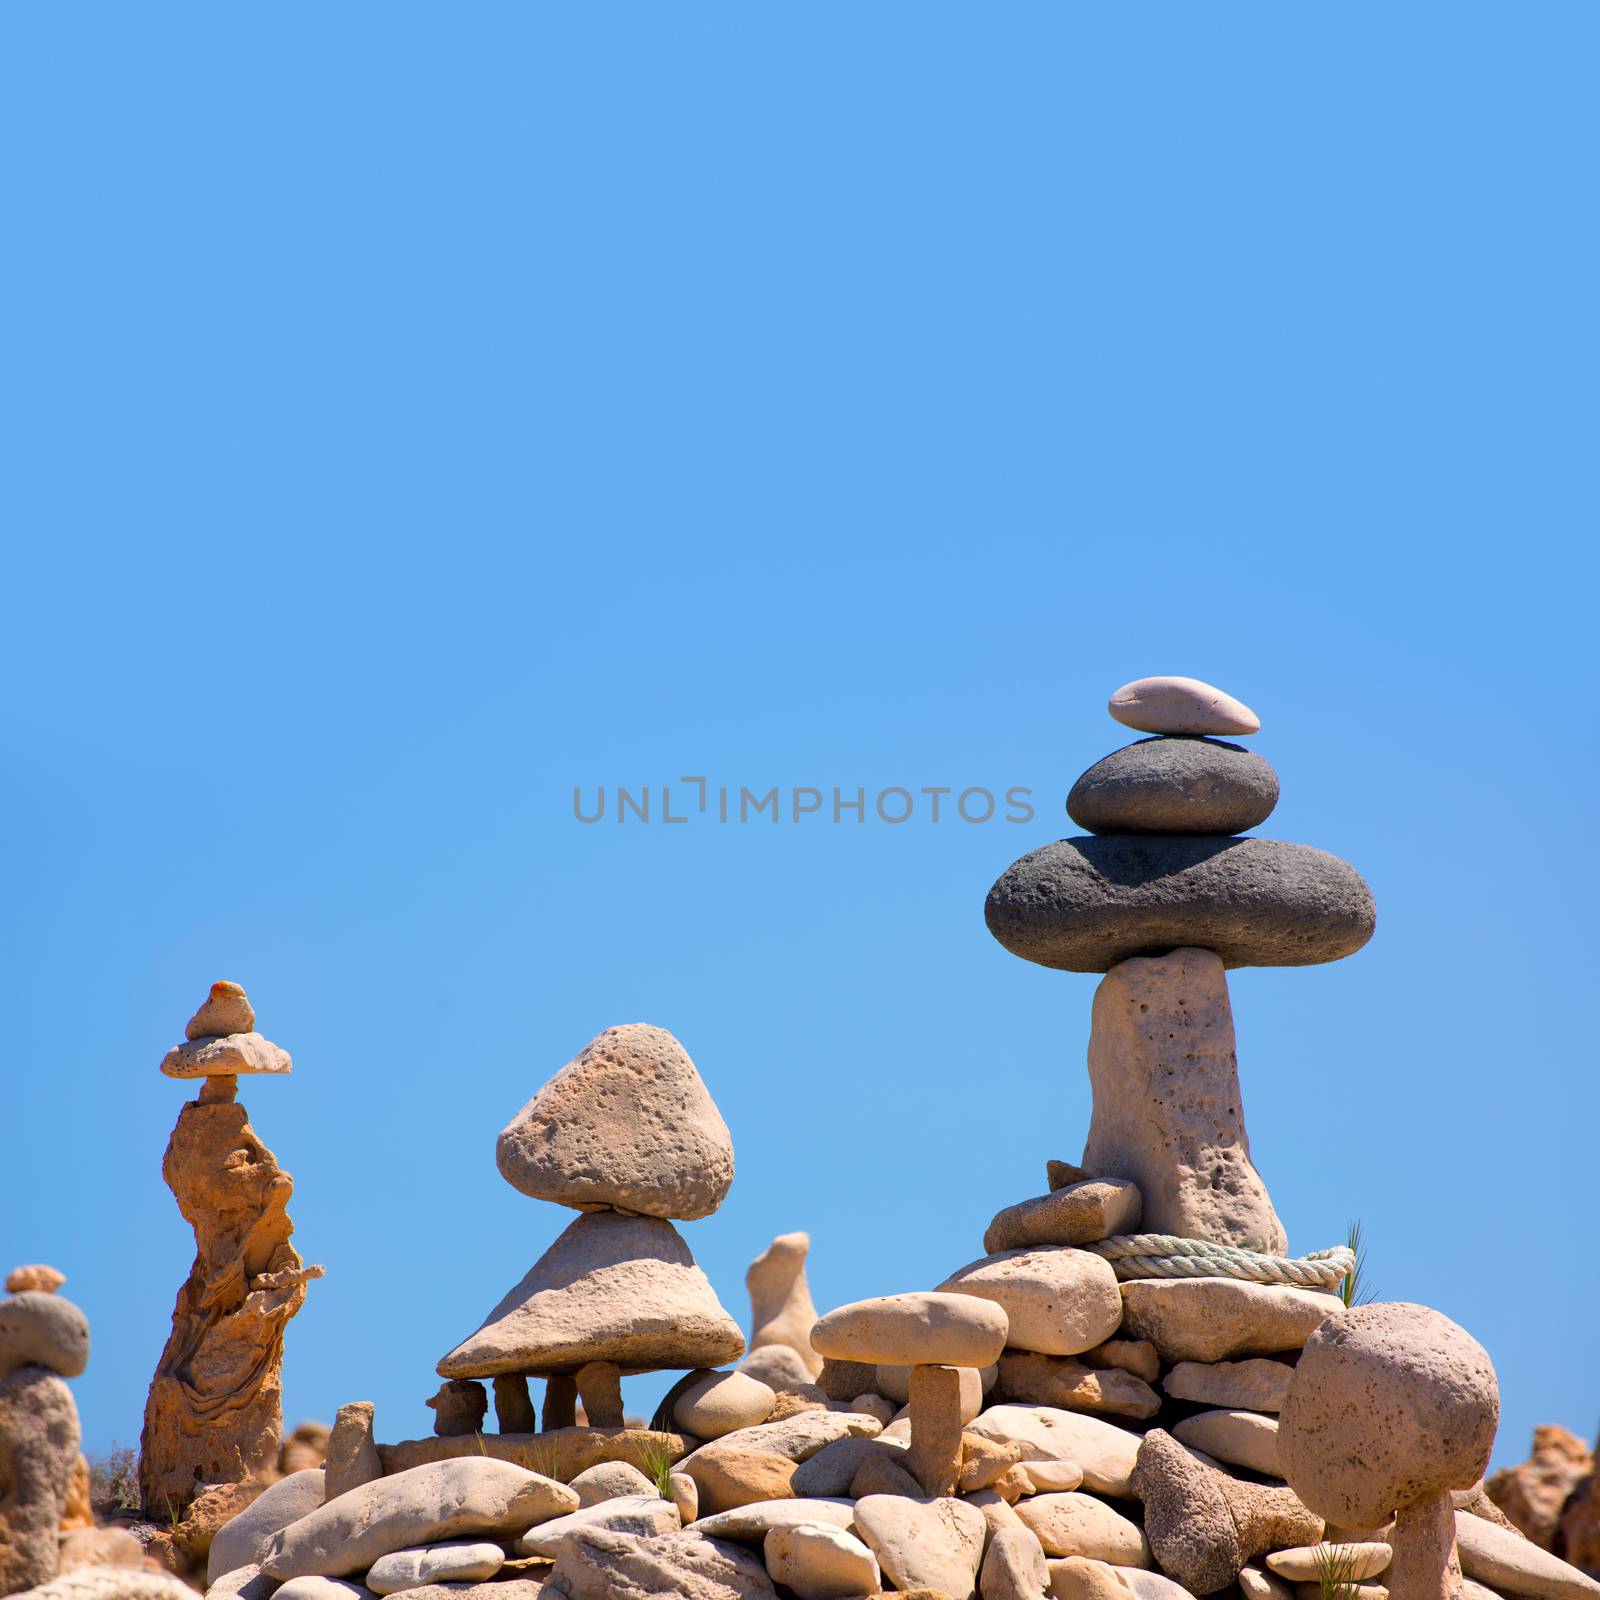 Stone figures on beach shore of Illetes beach in Formentera Mediterranean Balearic Islands